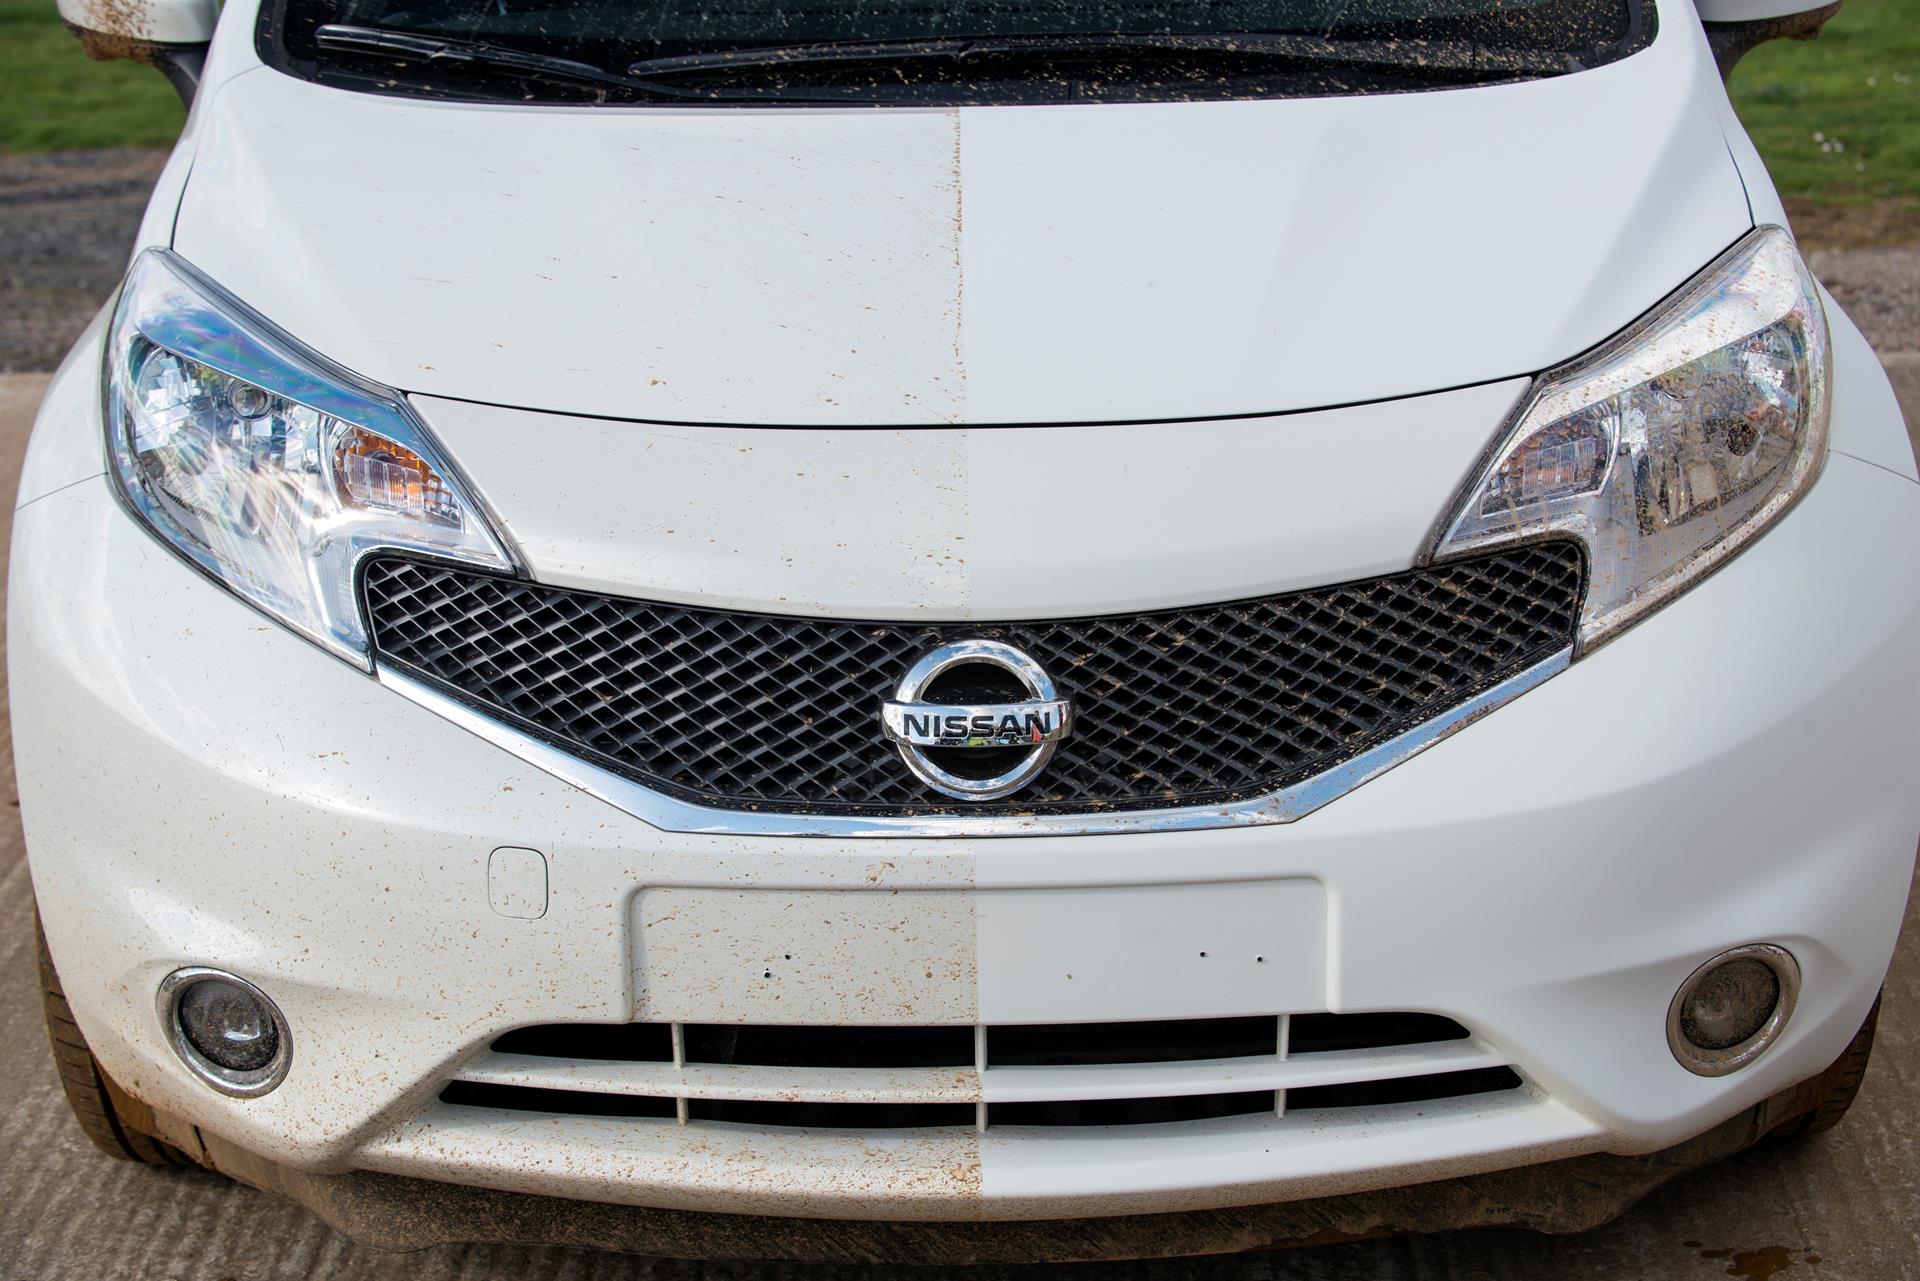 2015 Nissan Leaf Self-Cleaning Prototype